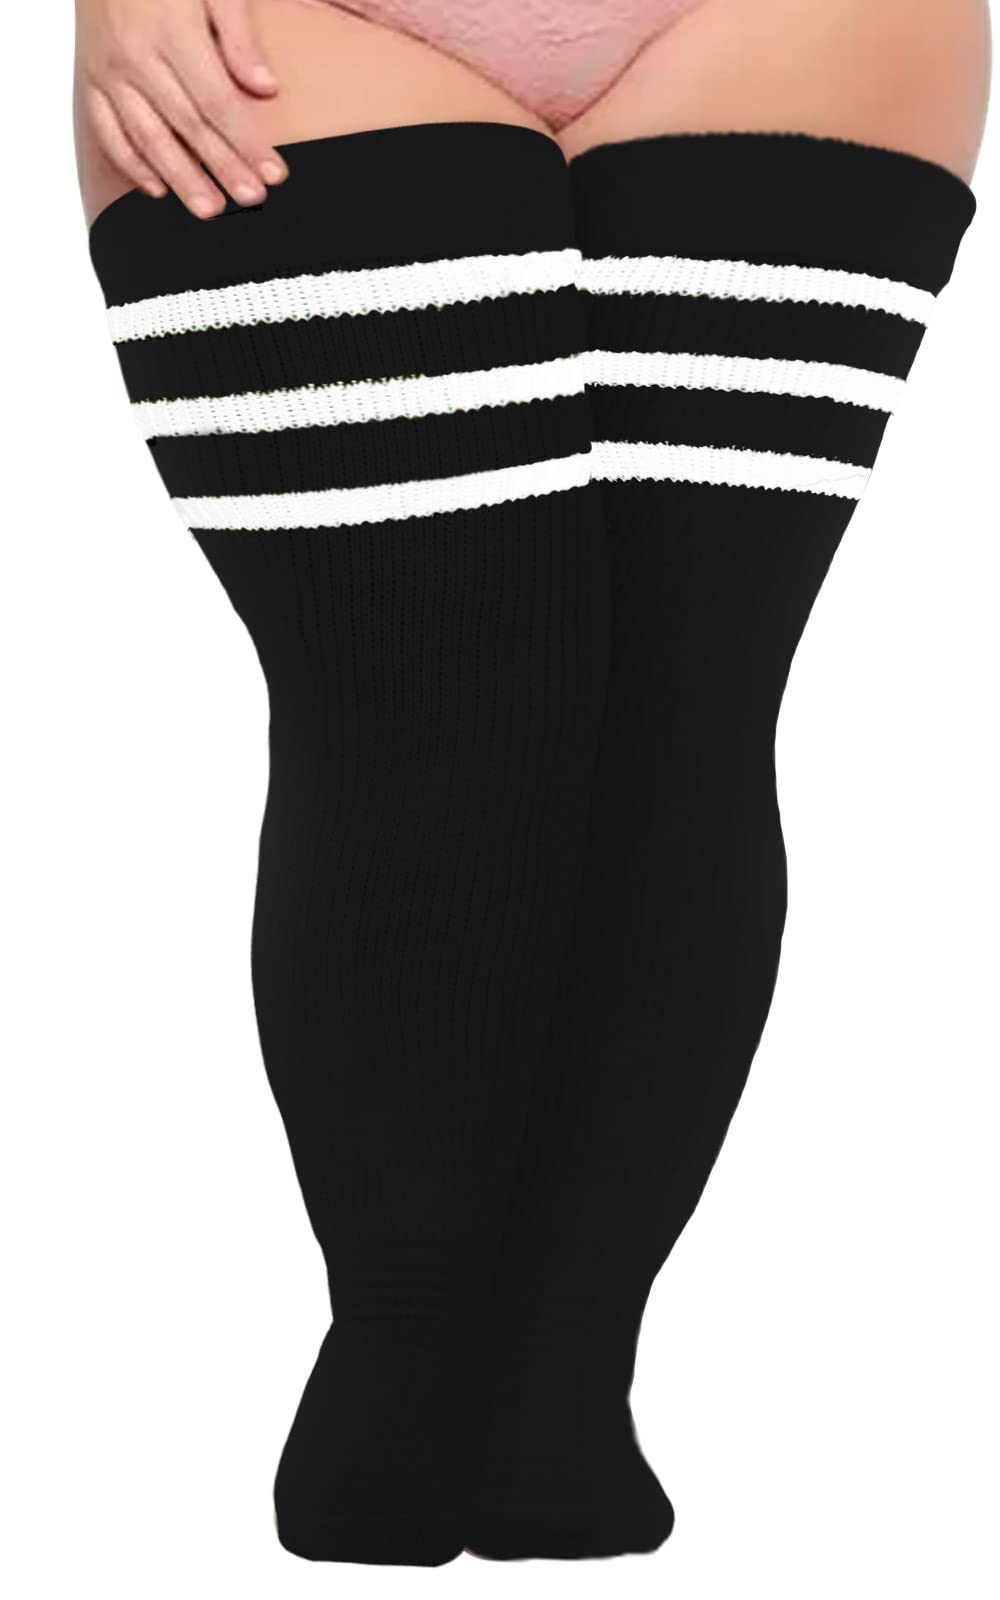 Plus Size Thigh High Socks Striped- Black & White - Moon Wood